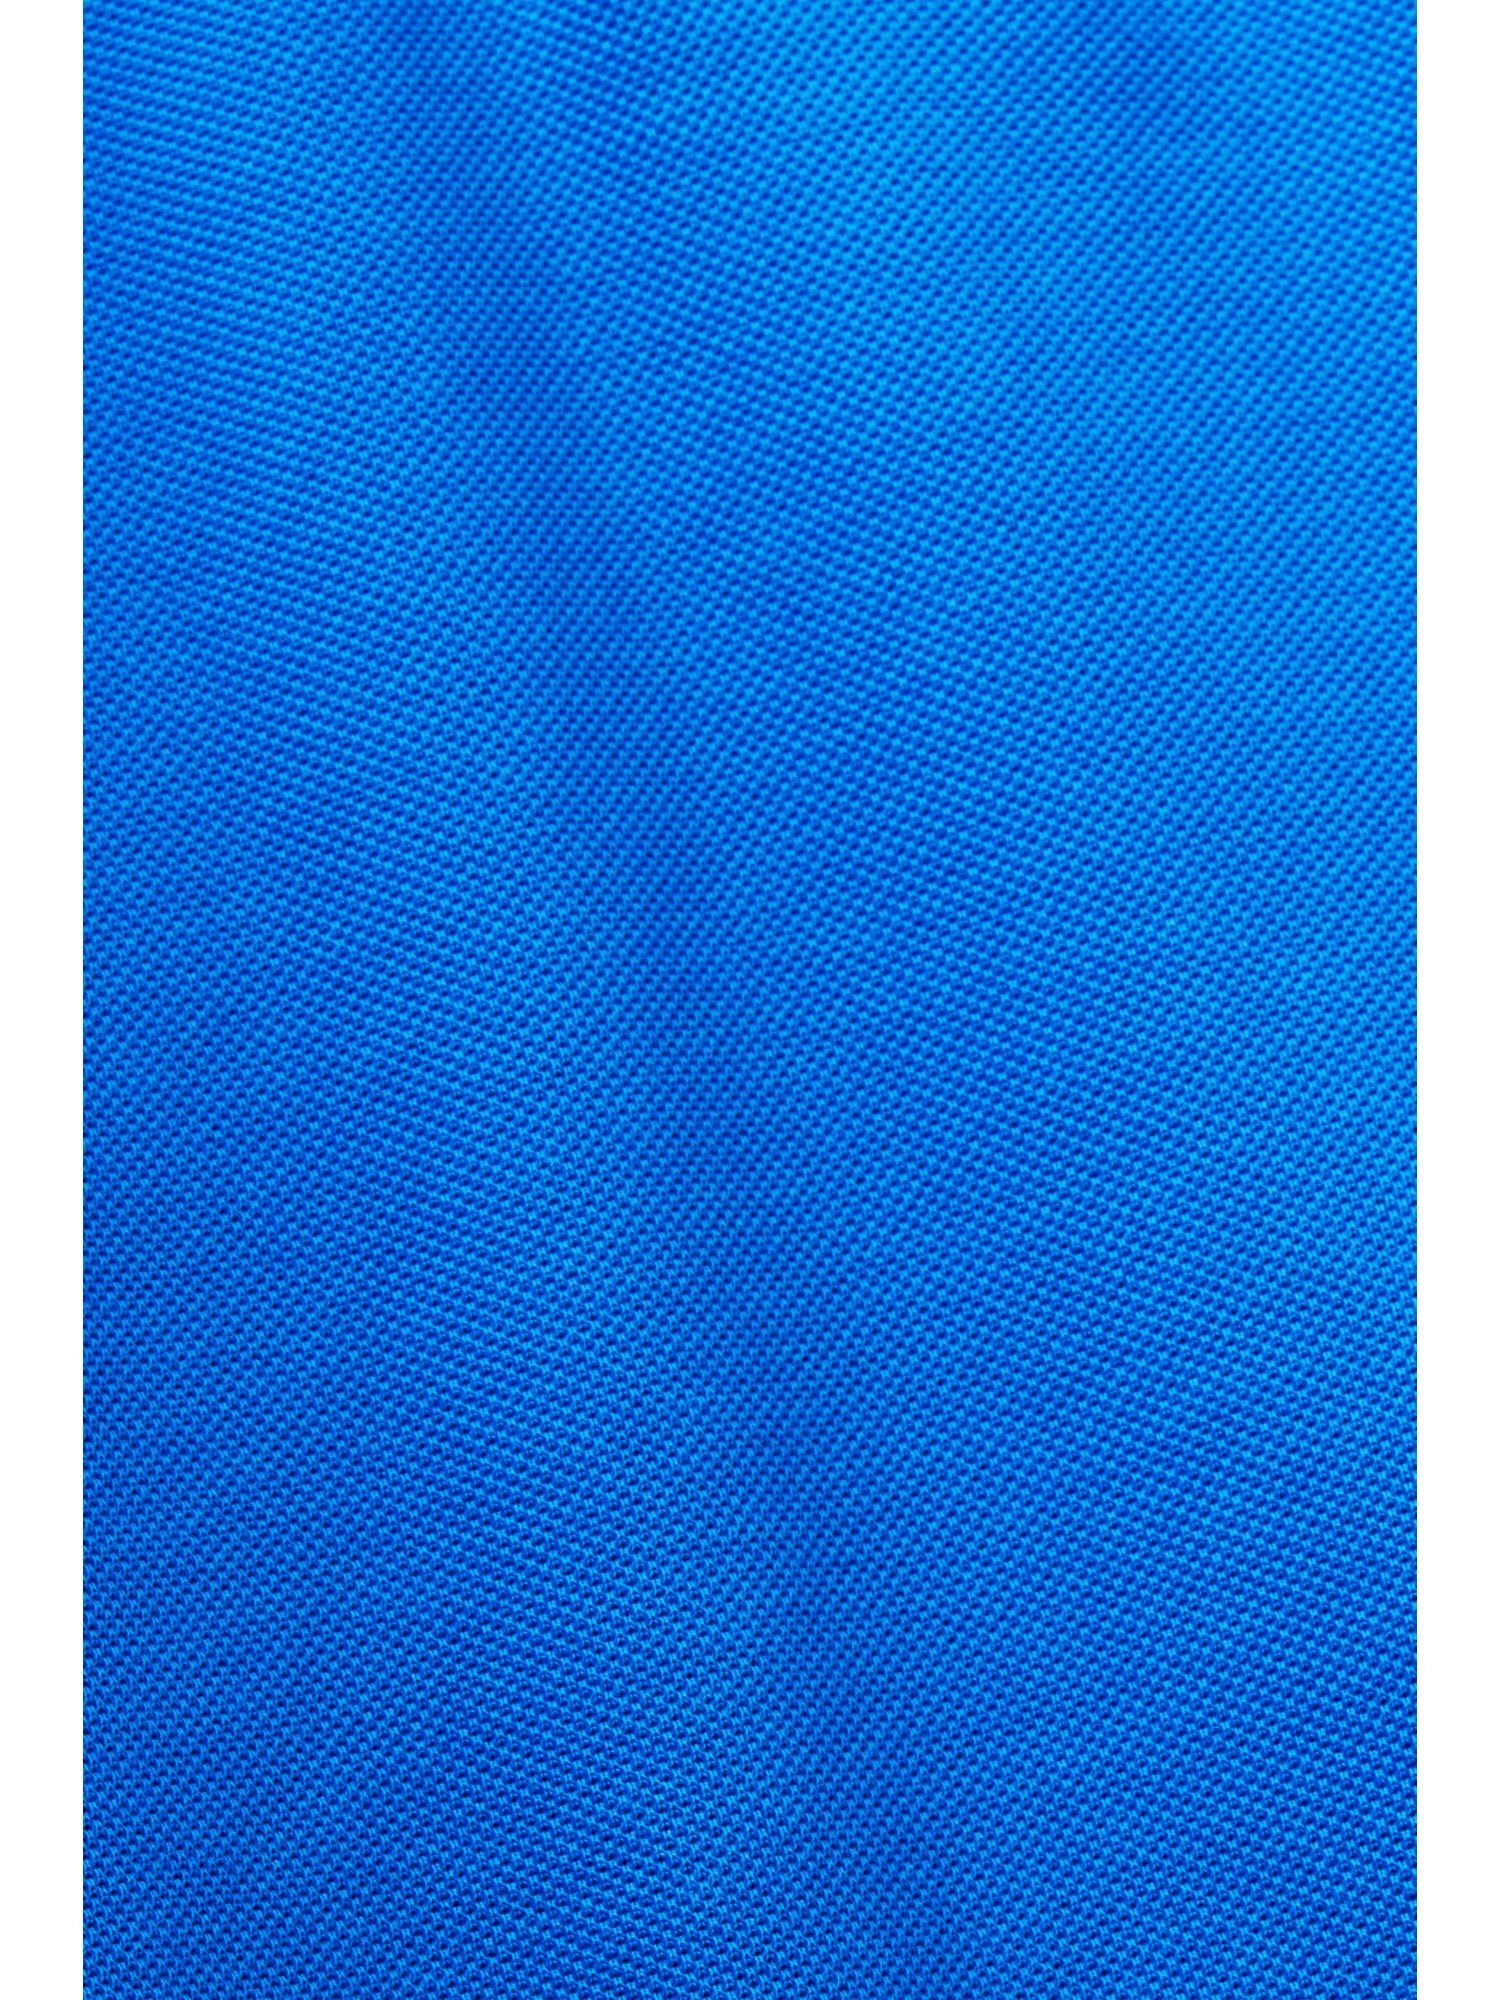 Esprit Poloshirt Slim Fit Poloshirt BLUE